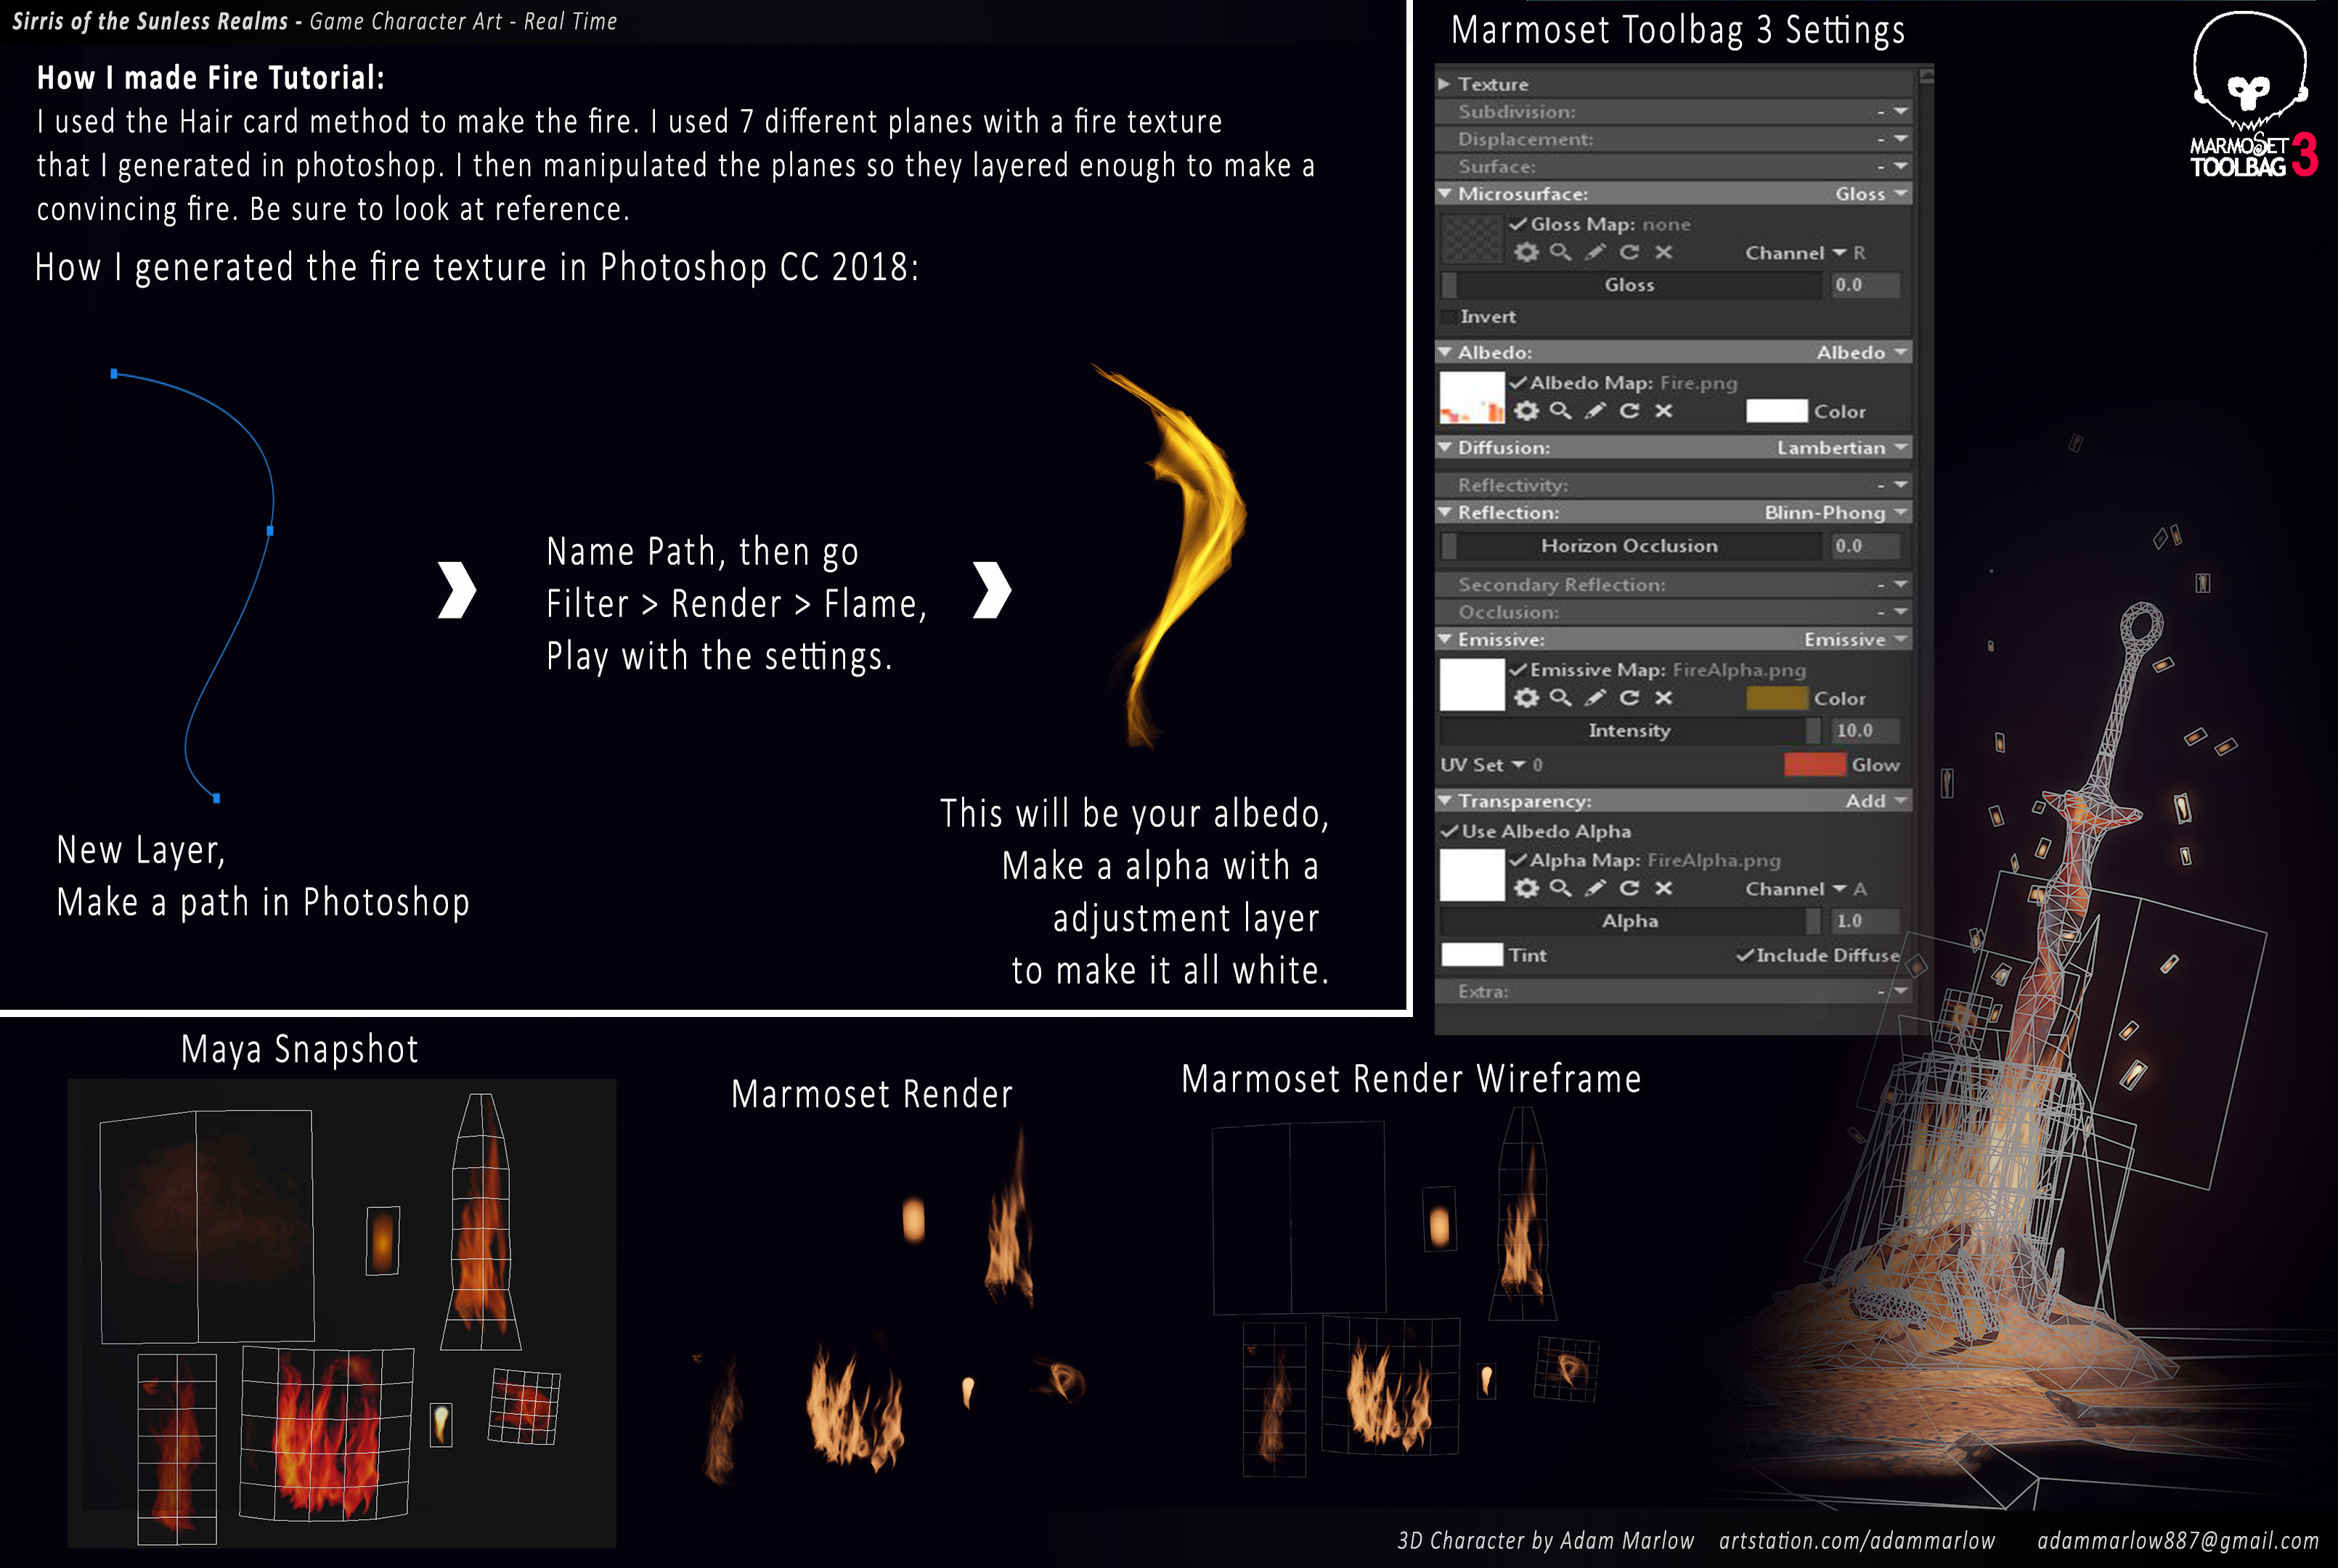 Fire tutorial using Maya, Photoshop 2018, and  Marmoset